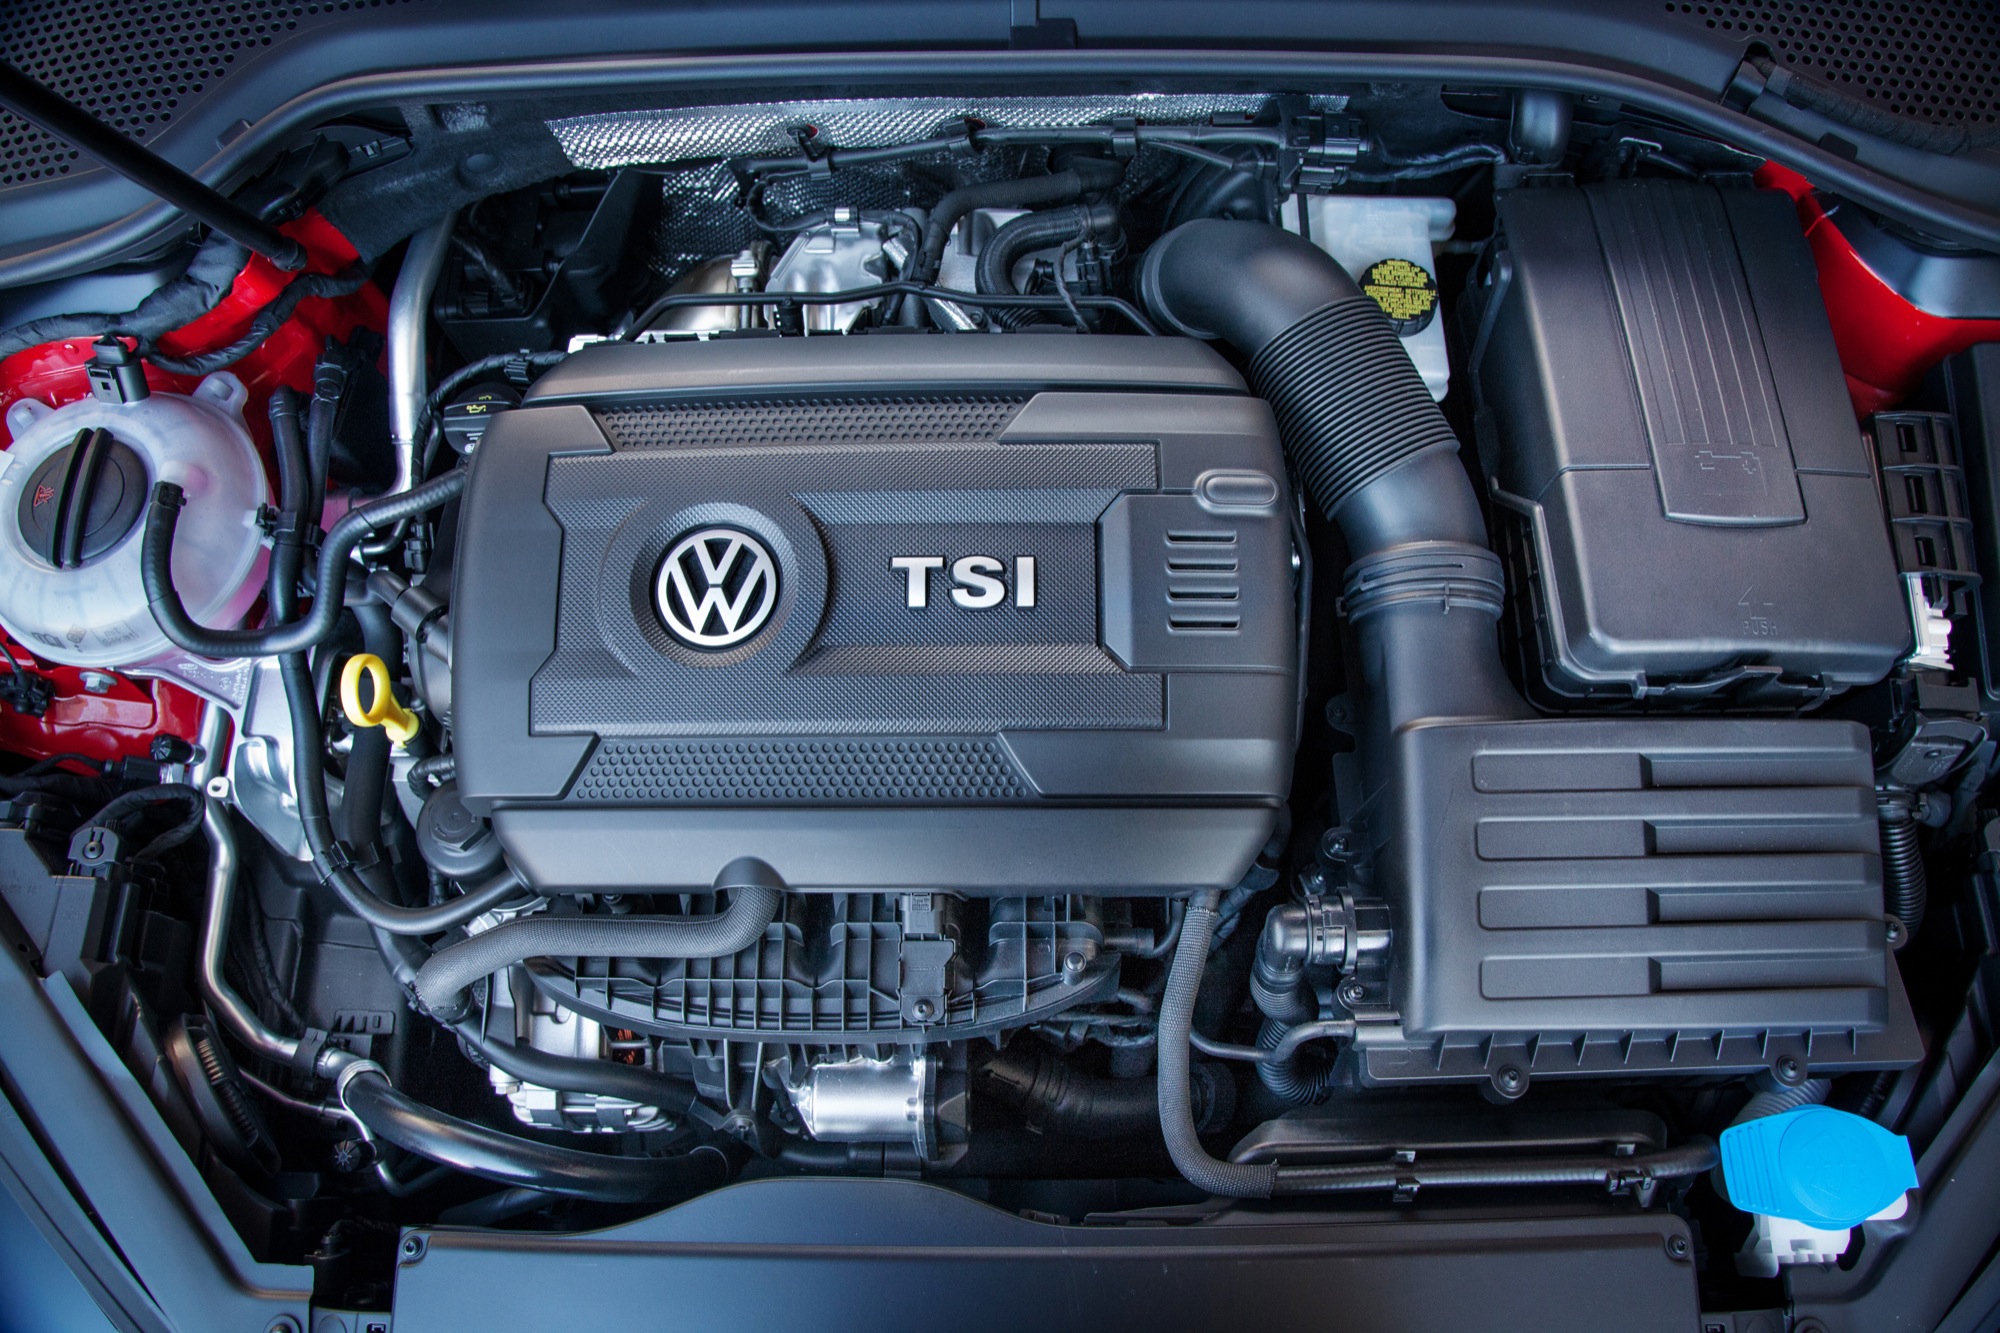 1.4 0.0. Volkswagen Golf 1.4 TSI двигатель. Двигатель Volkswagen TSI 2.0. Volkswagen Golf TSI 1.4. Двигатель Volkswagen Golf 6 1.2 TSI.